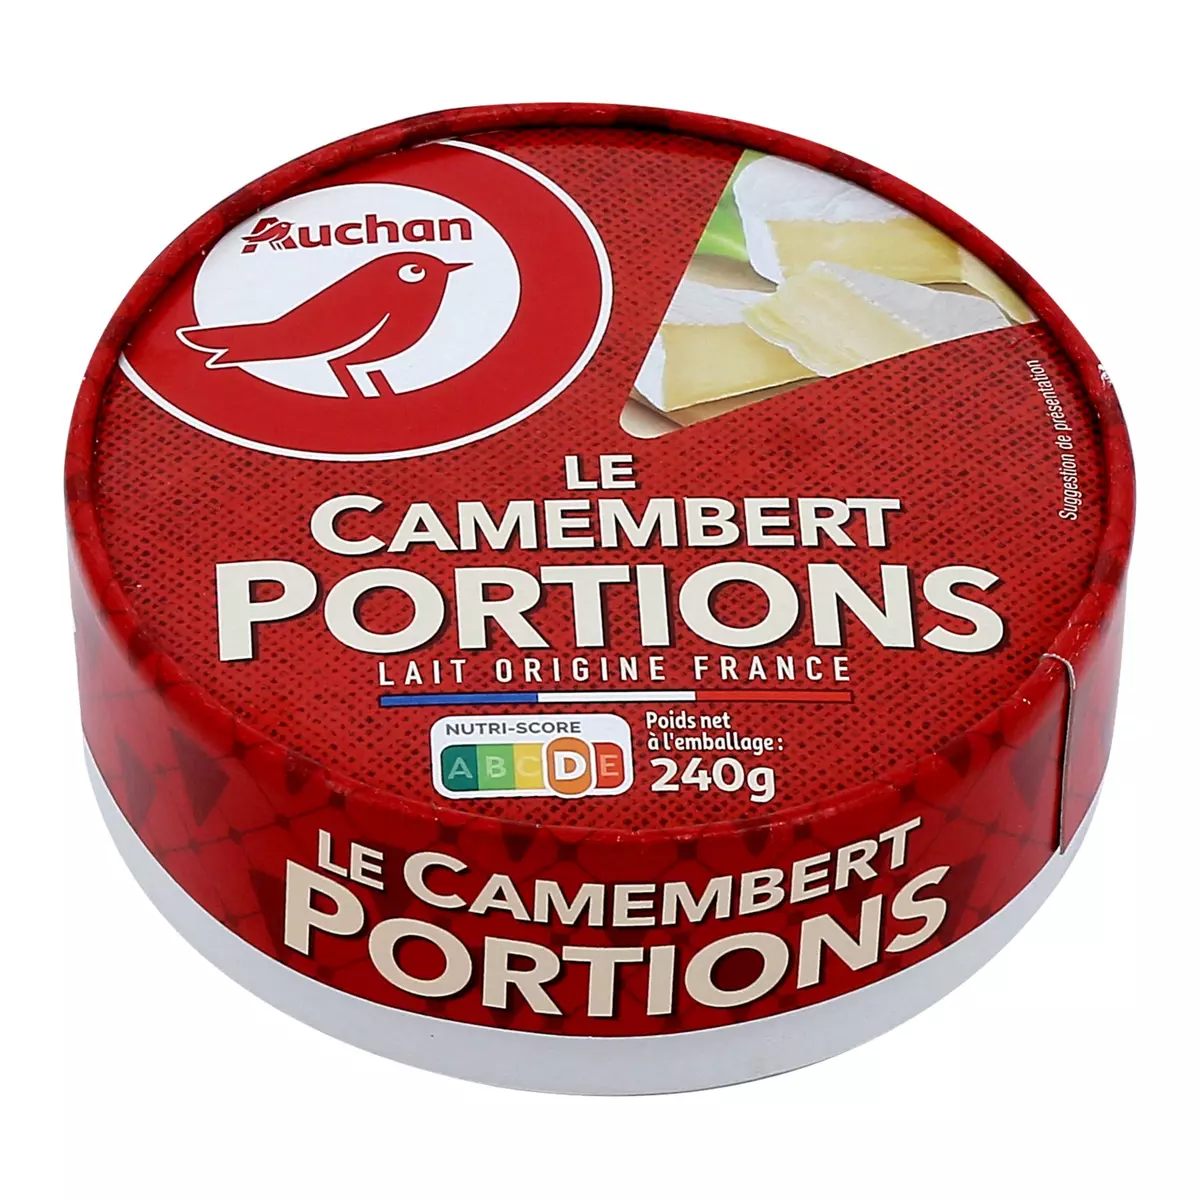 AUCHAN Camembert en portions  8 portions 240g